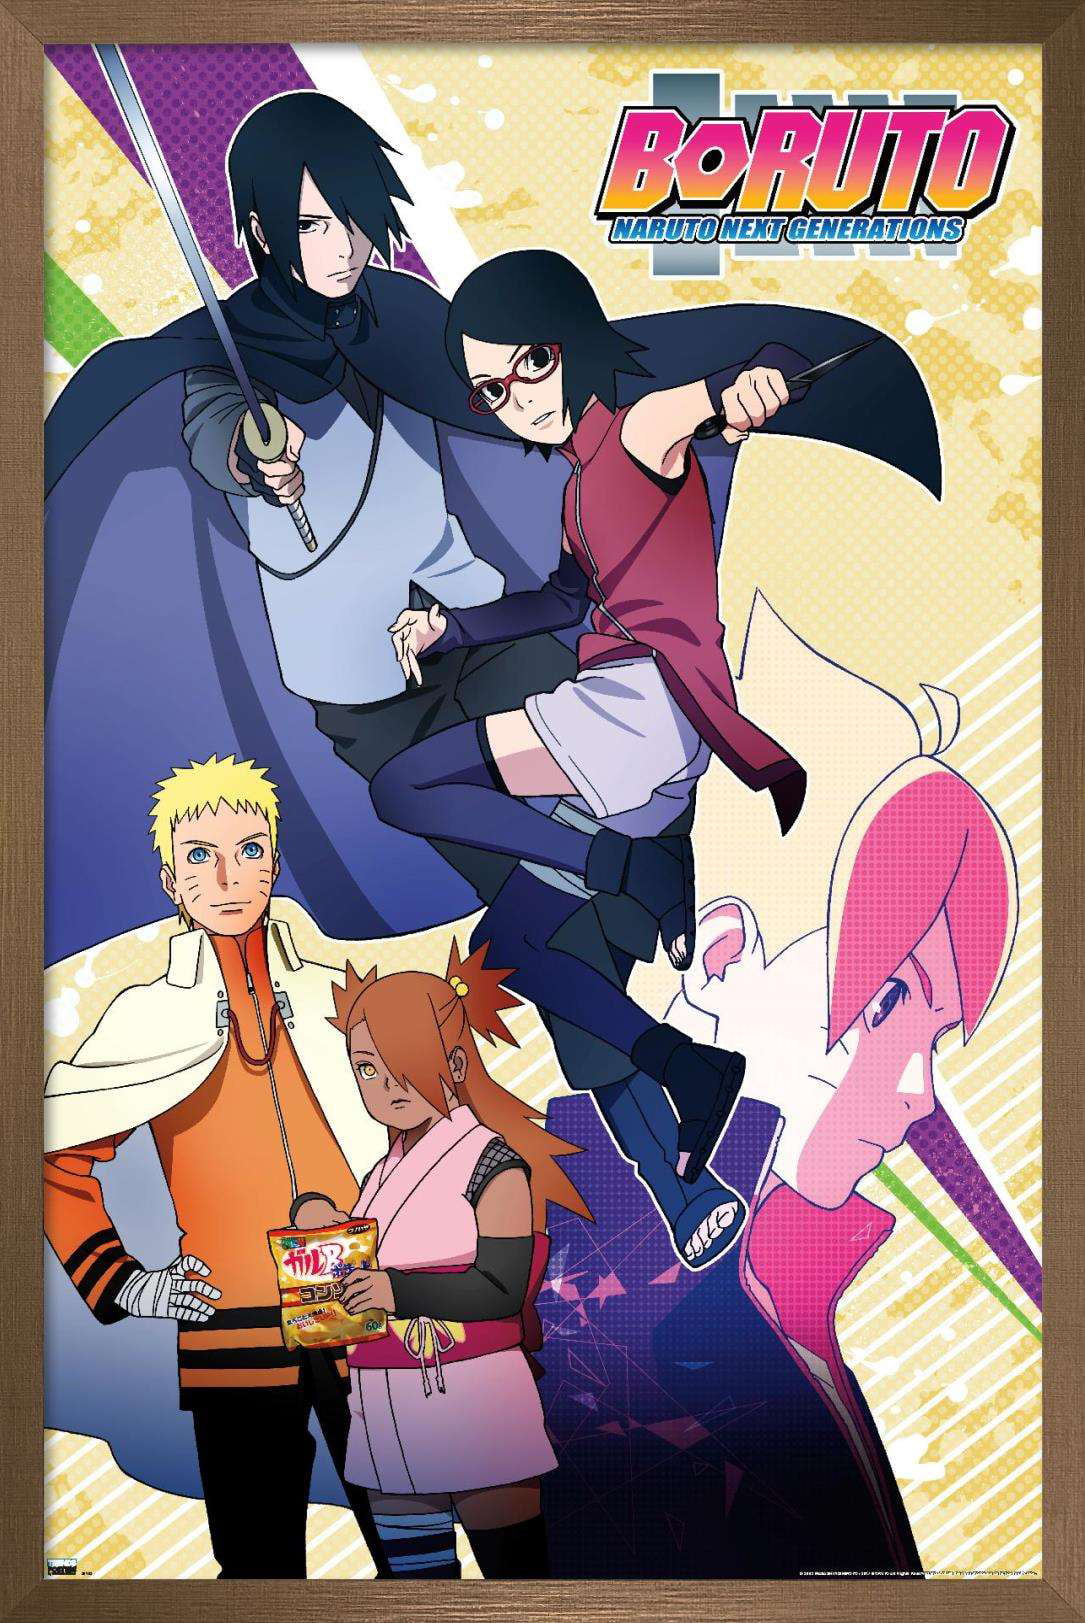 Boruto Naruto Next Generations - Grid Poster - 22.375' x 34